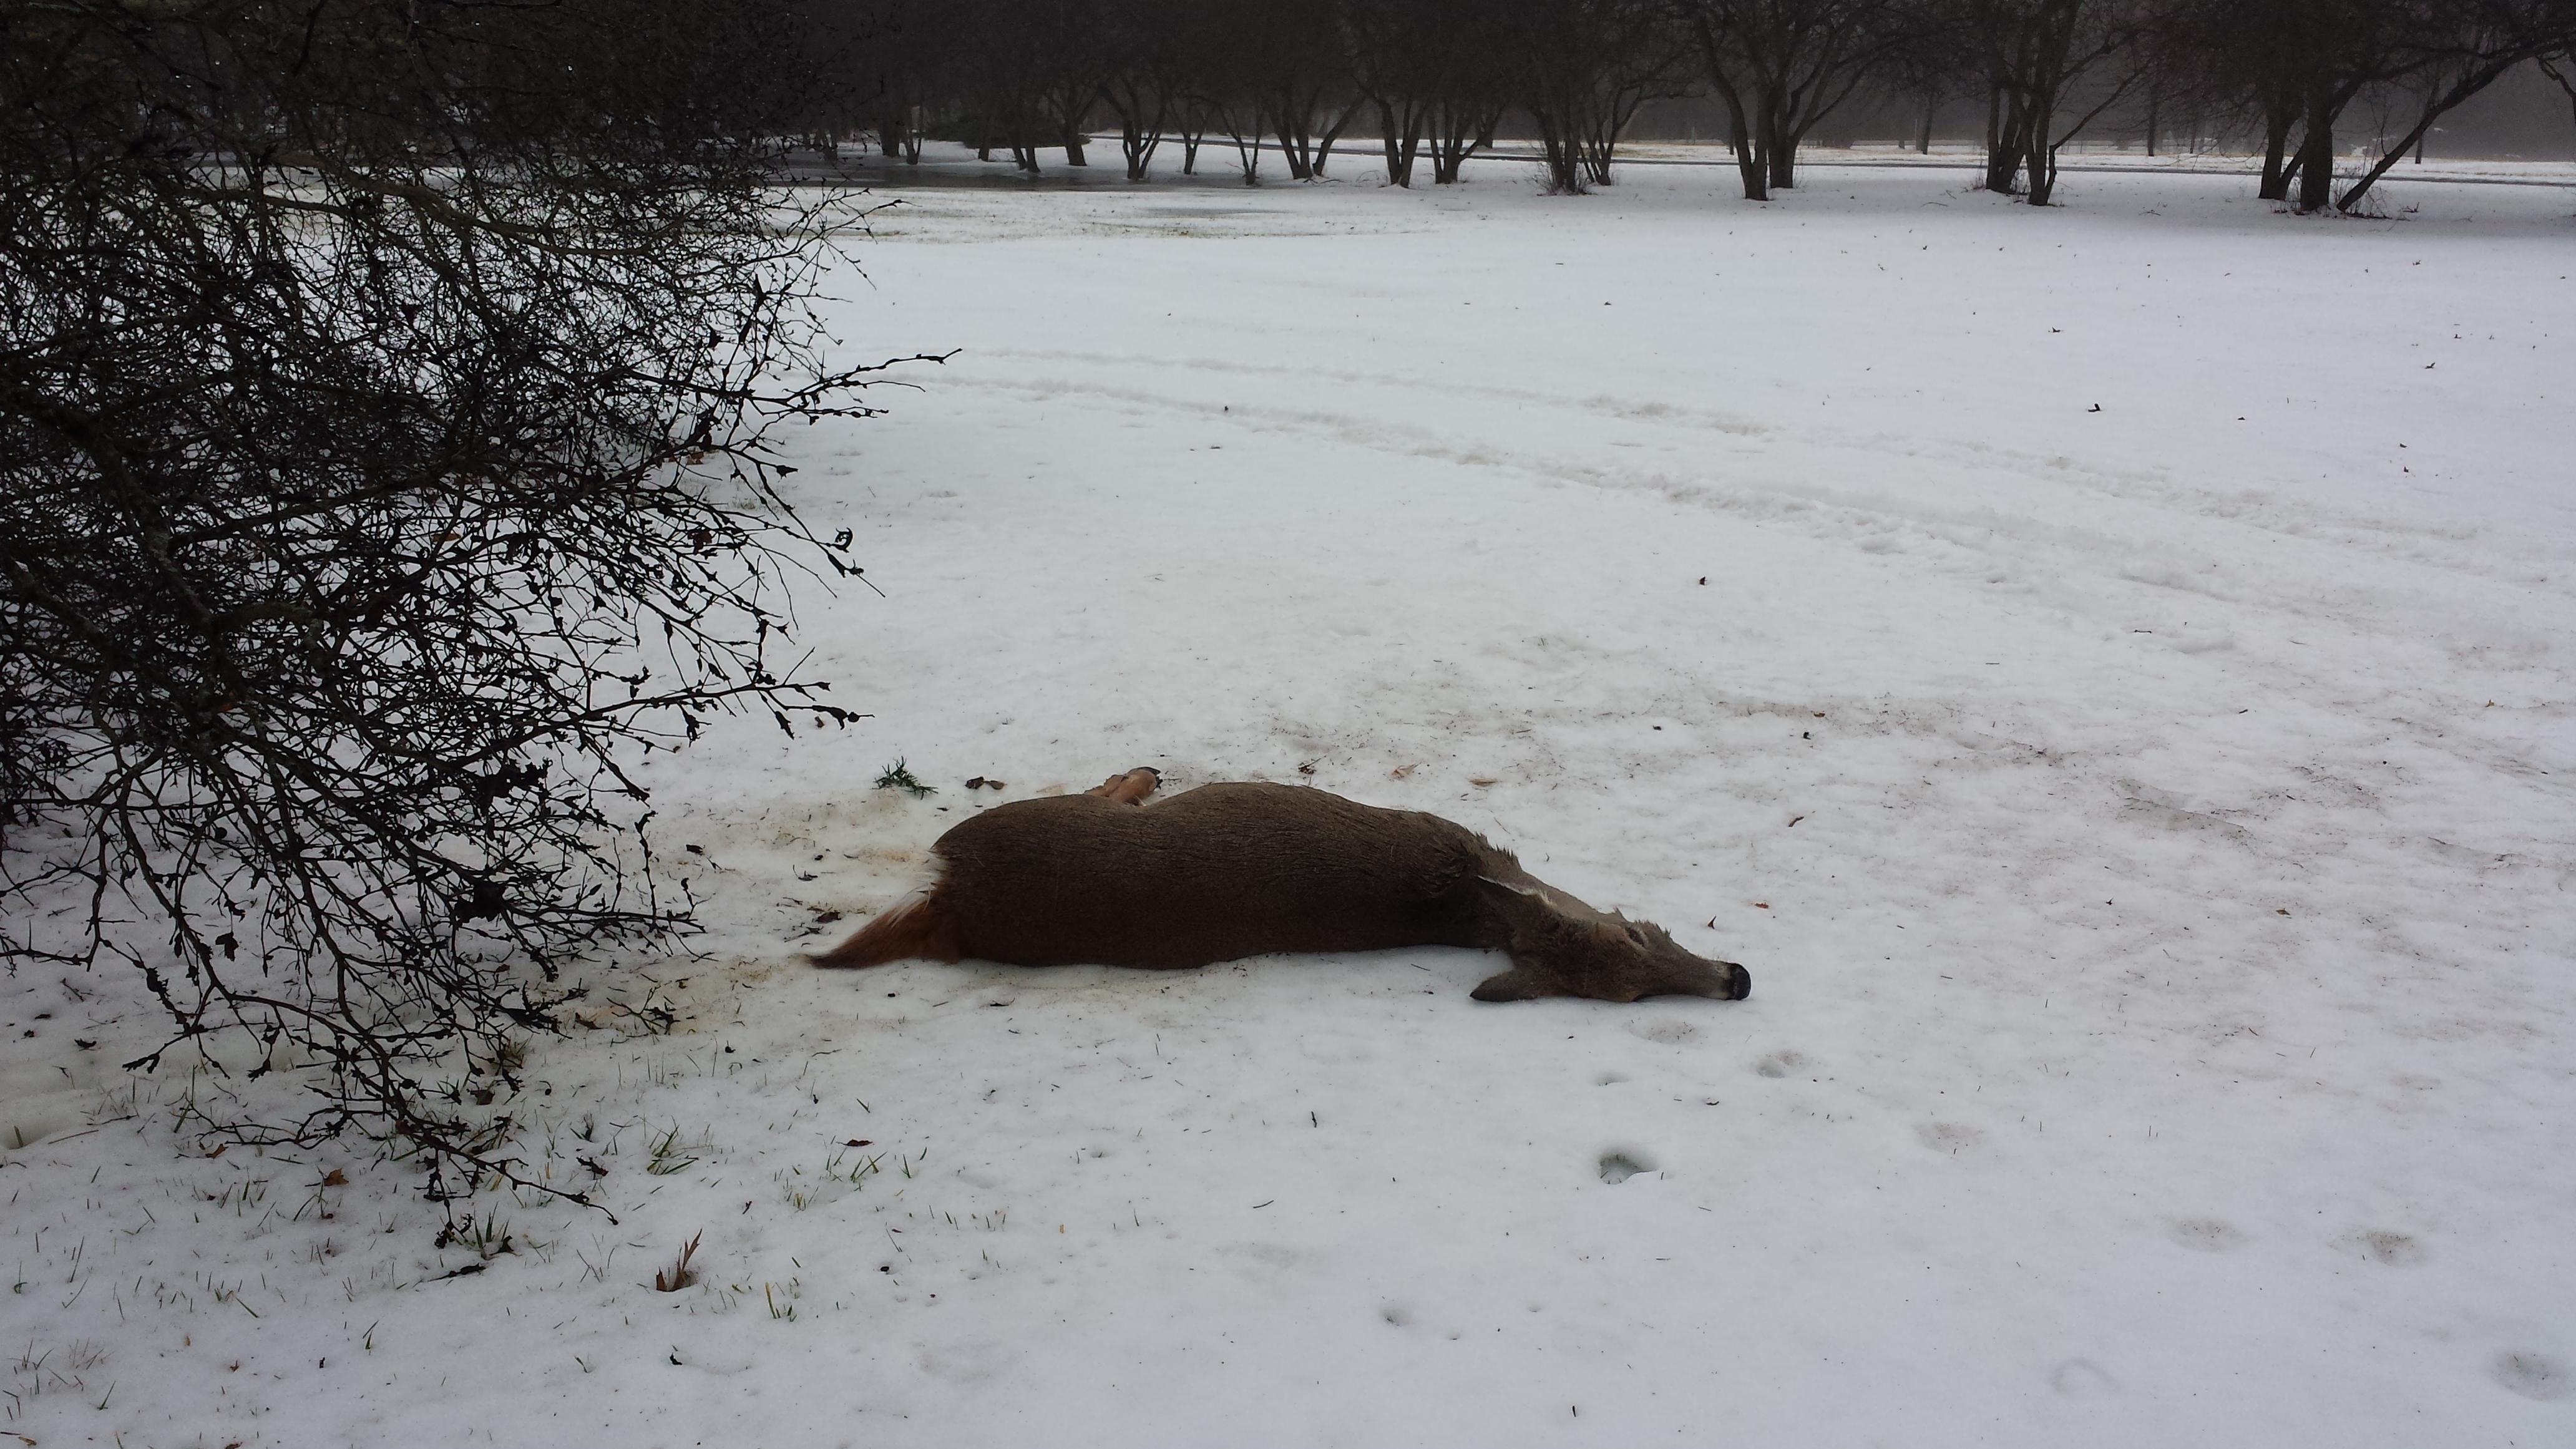 Dead Deer Removal Animal Control Specialists Inc Wauconda (847)827-7800